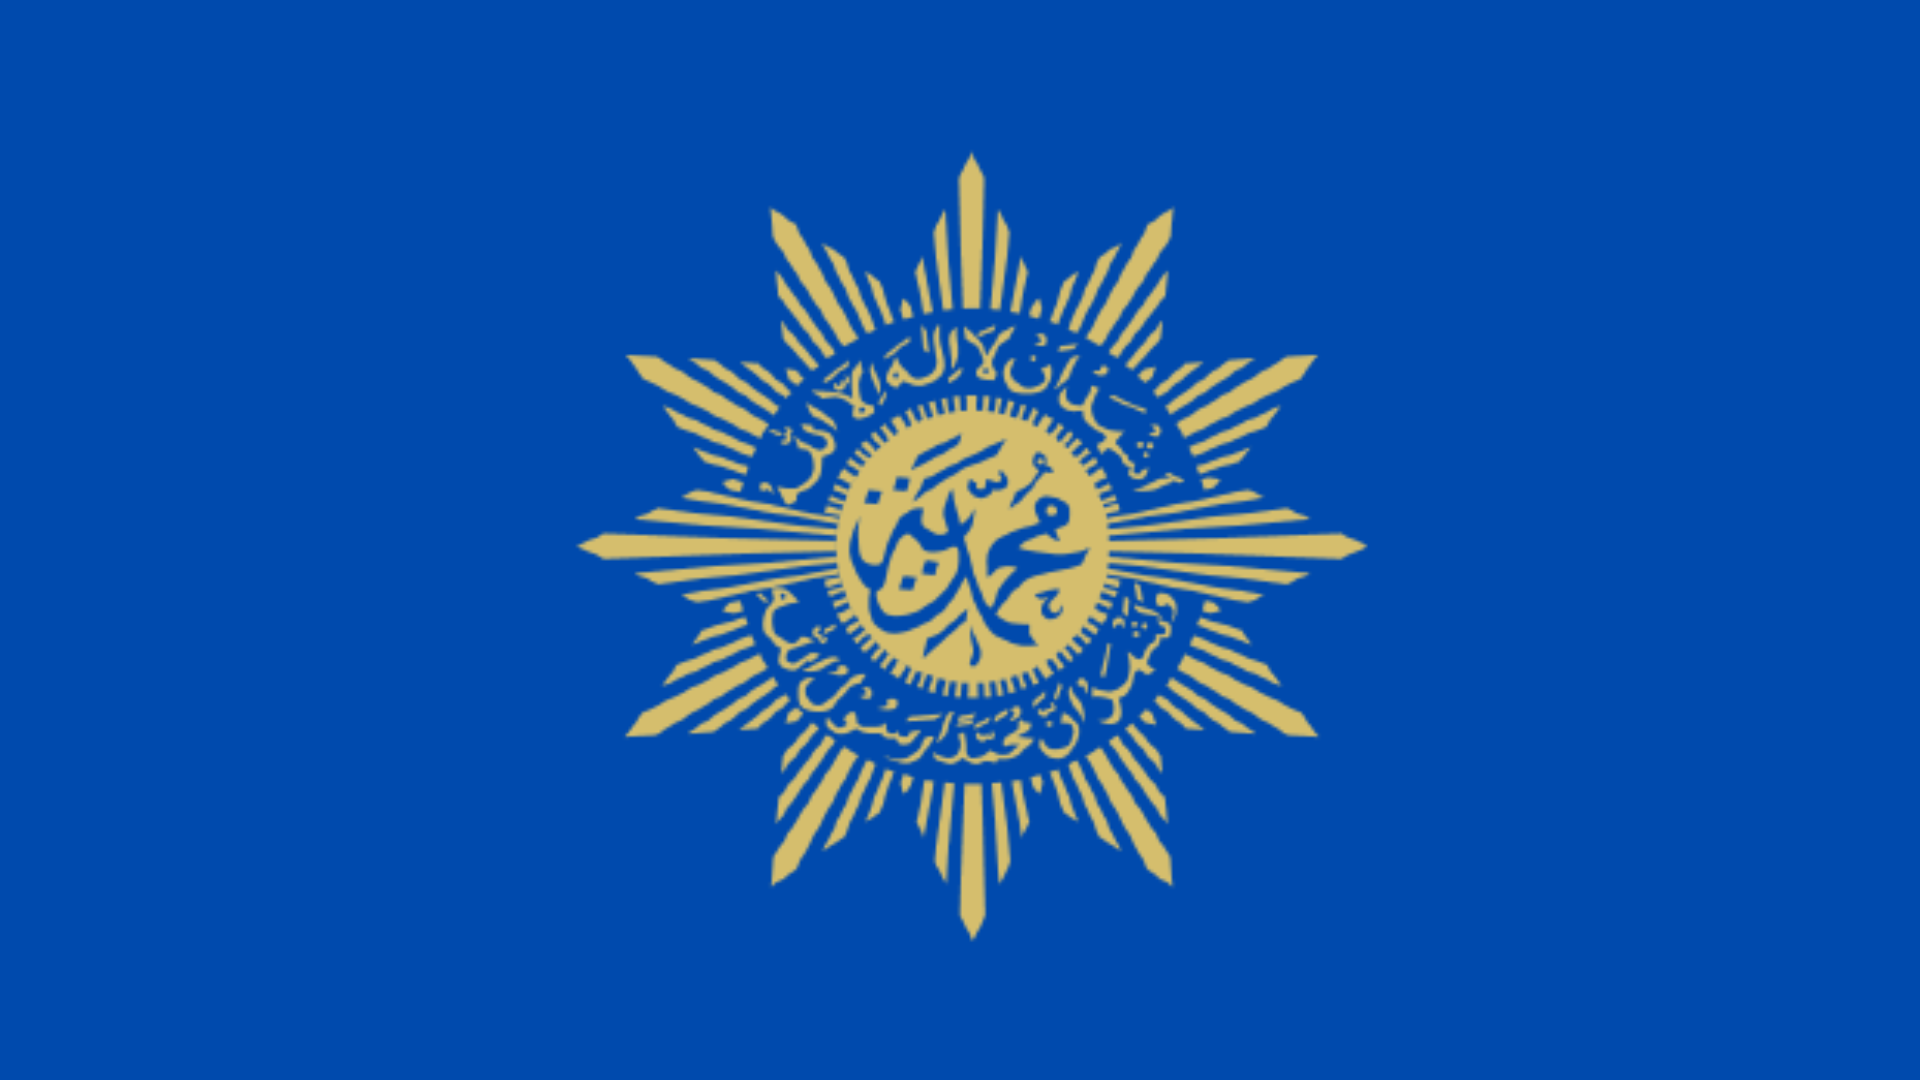 Logo Muhammadiyah.